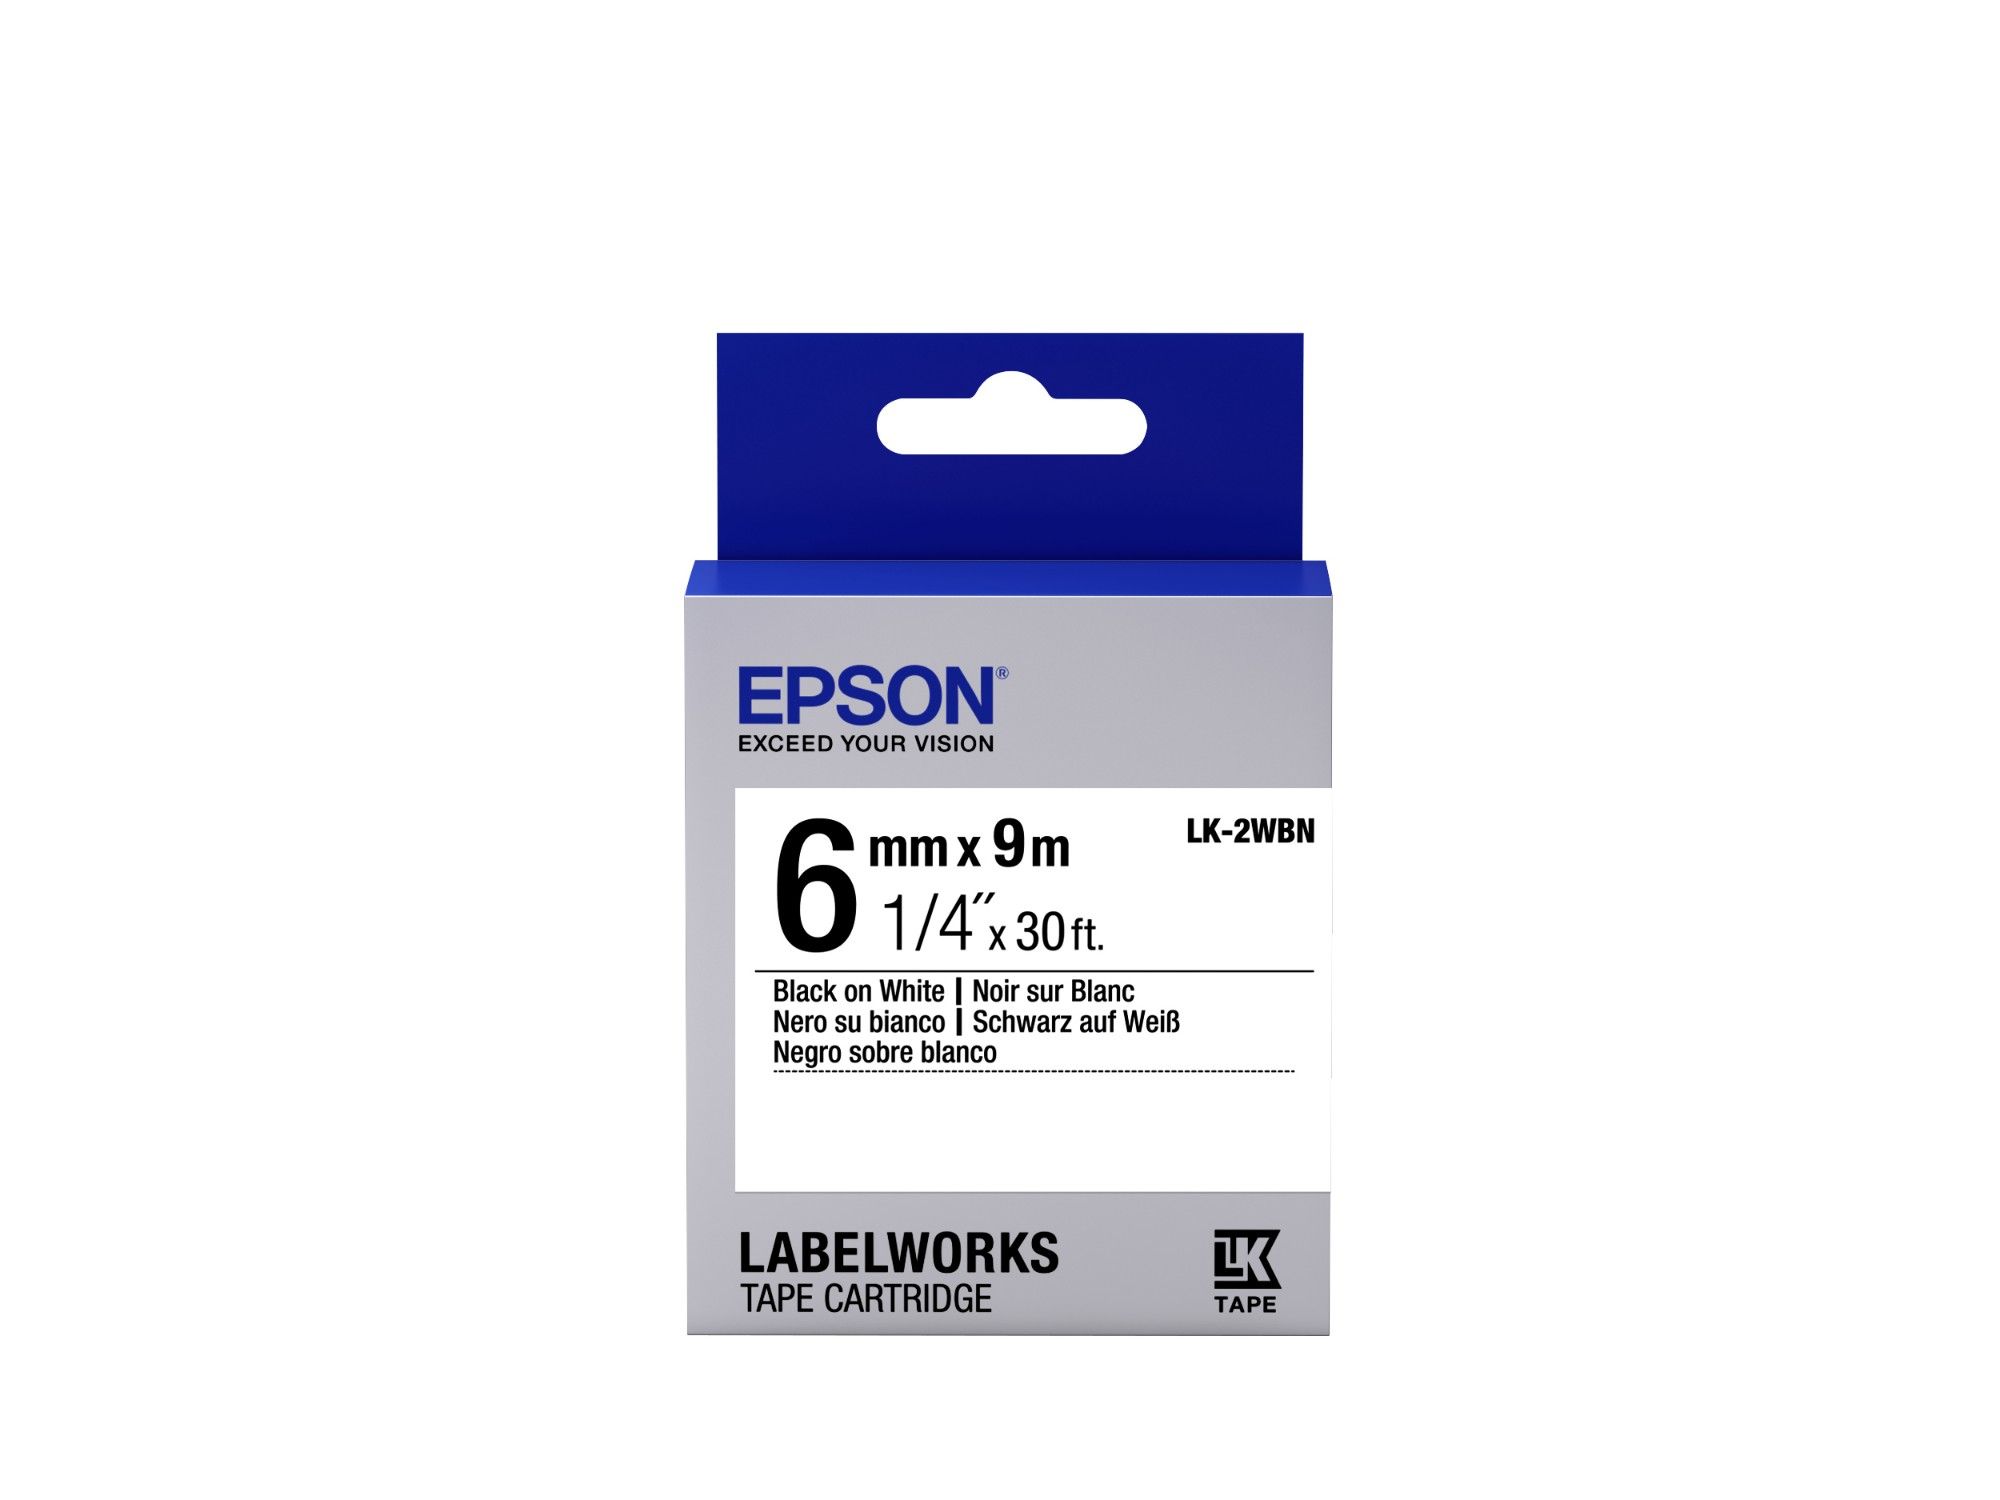 Epson Label Cartridge Standard LK-2WBN Black/White 6mm (9m)_1